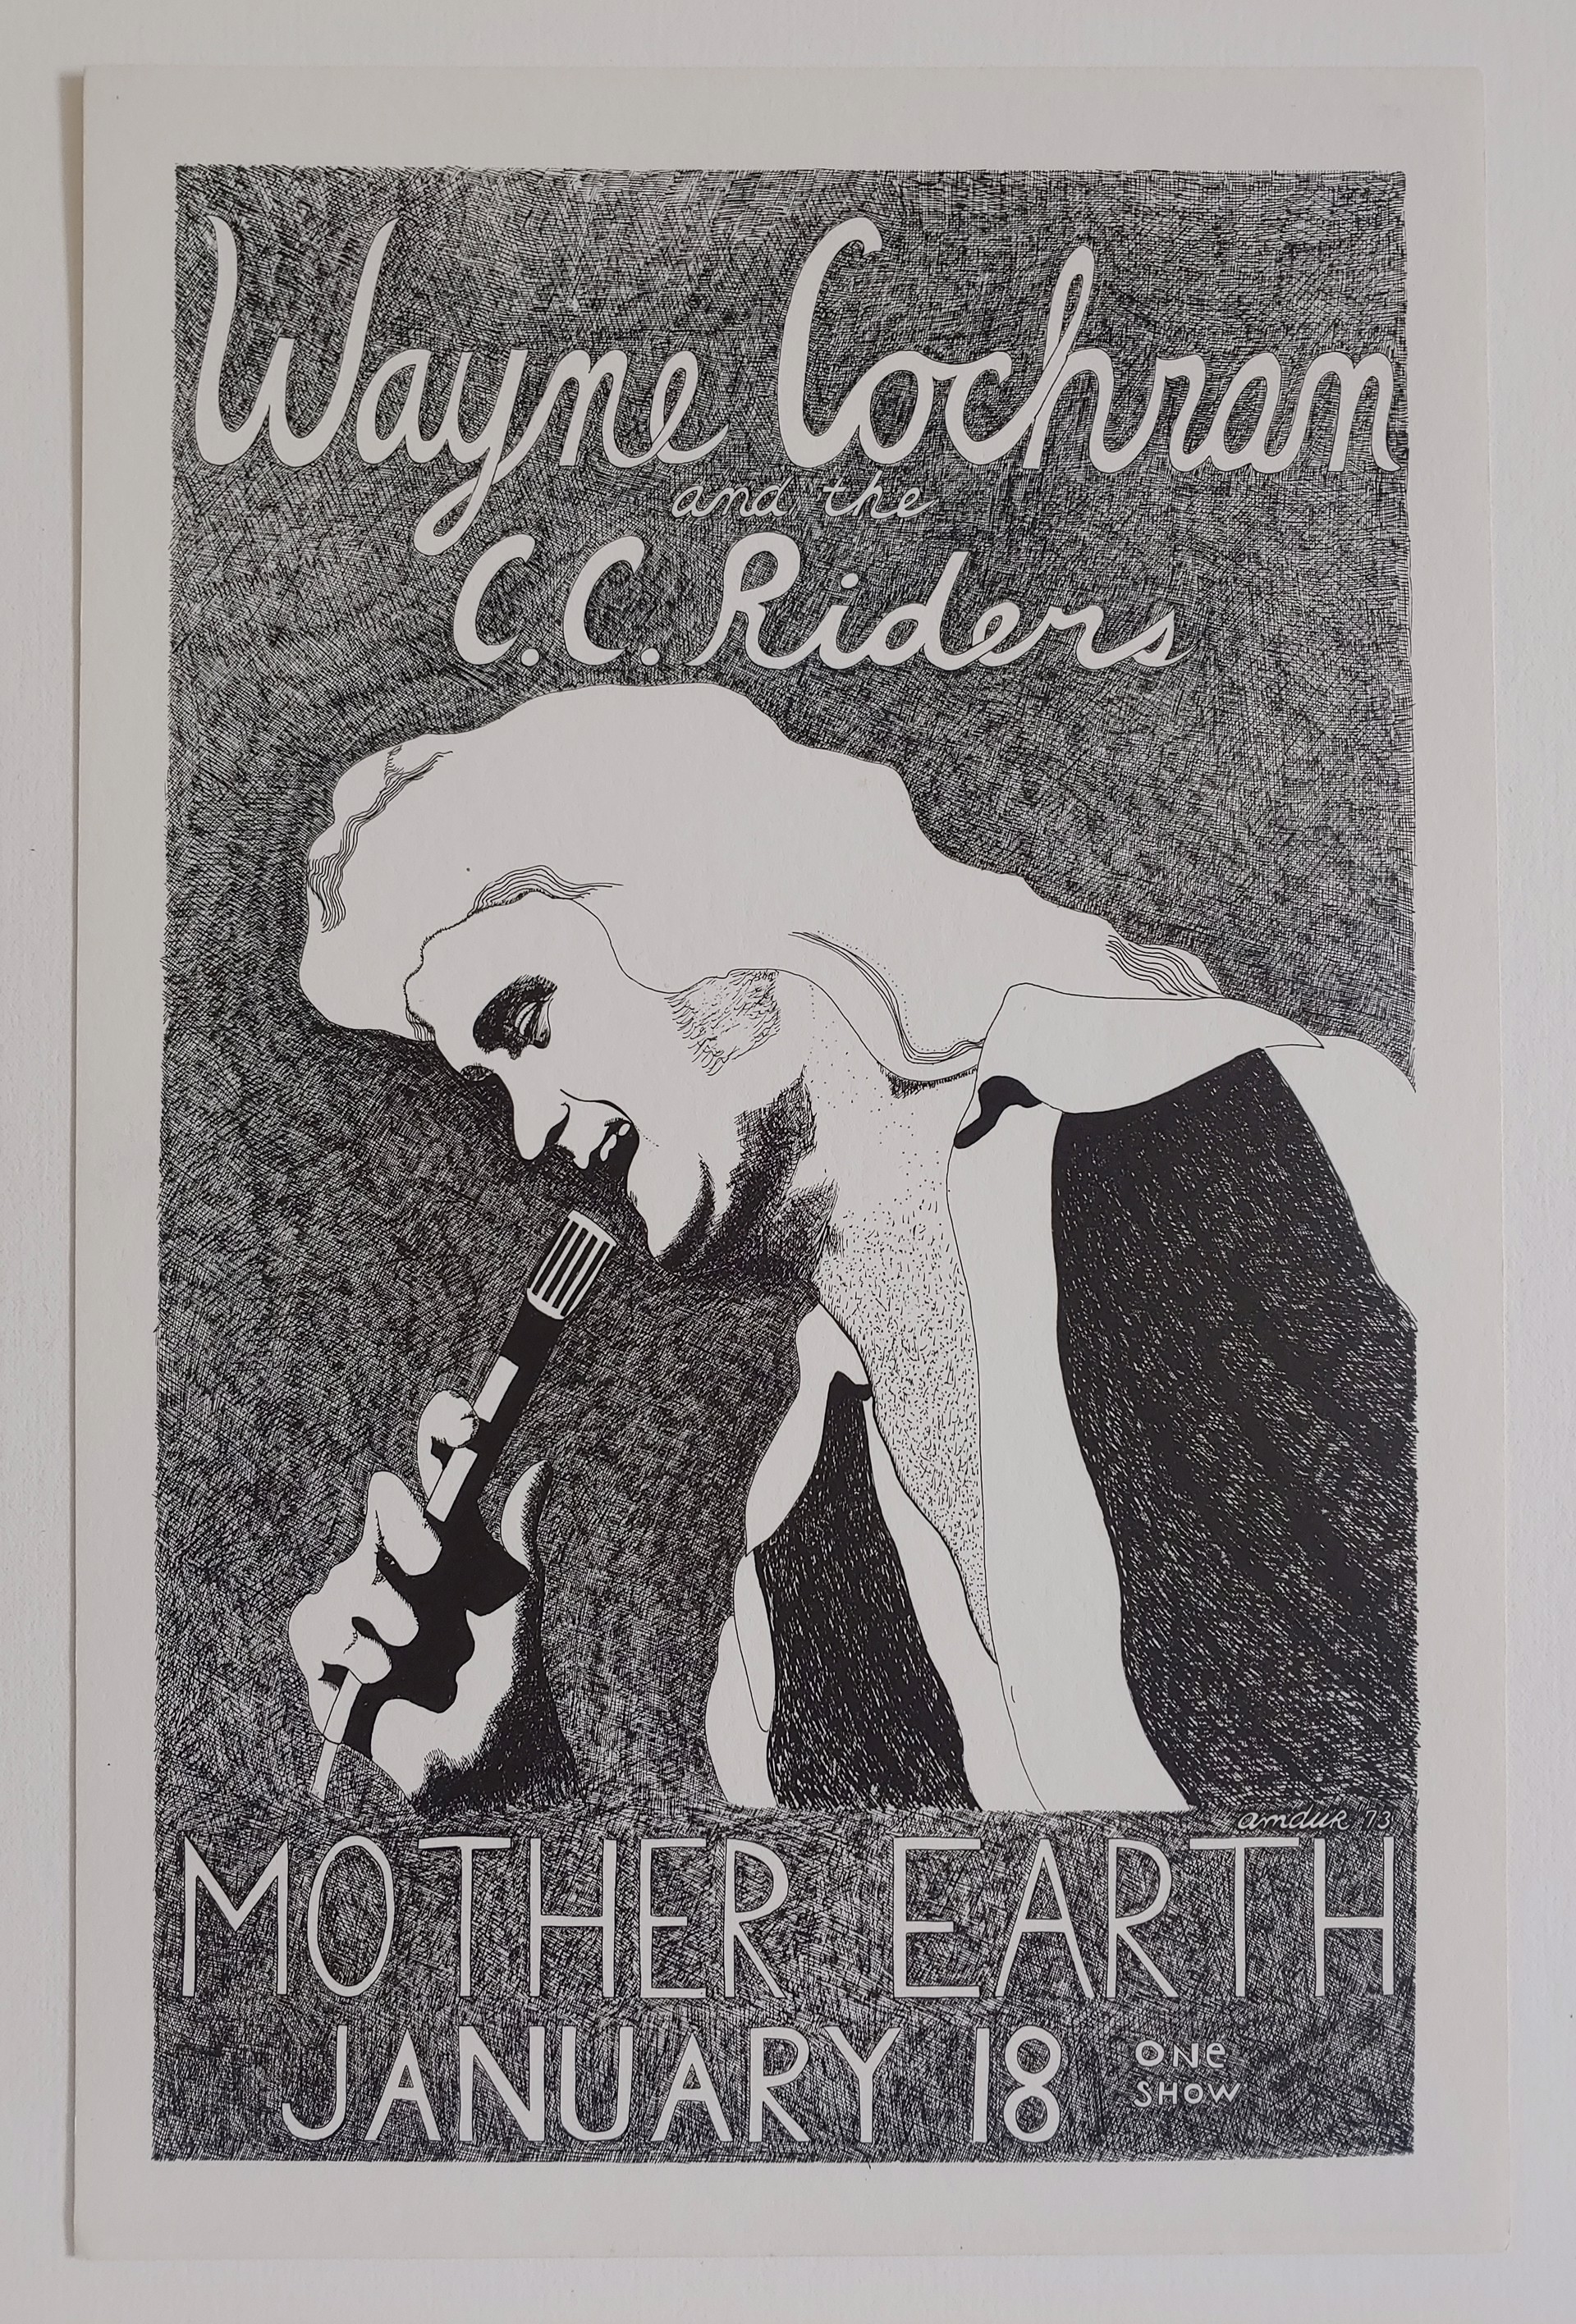 Wayne Cochran and the C.C. Riders - Poster by David Amdur